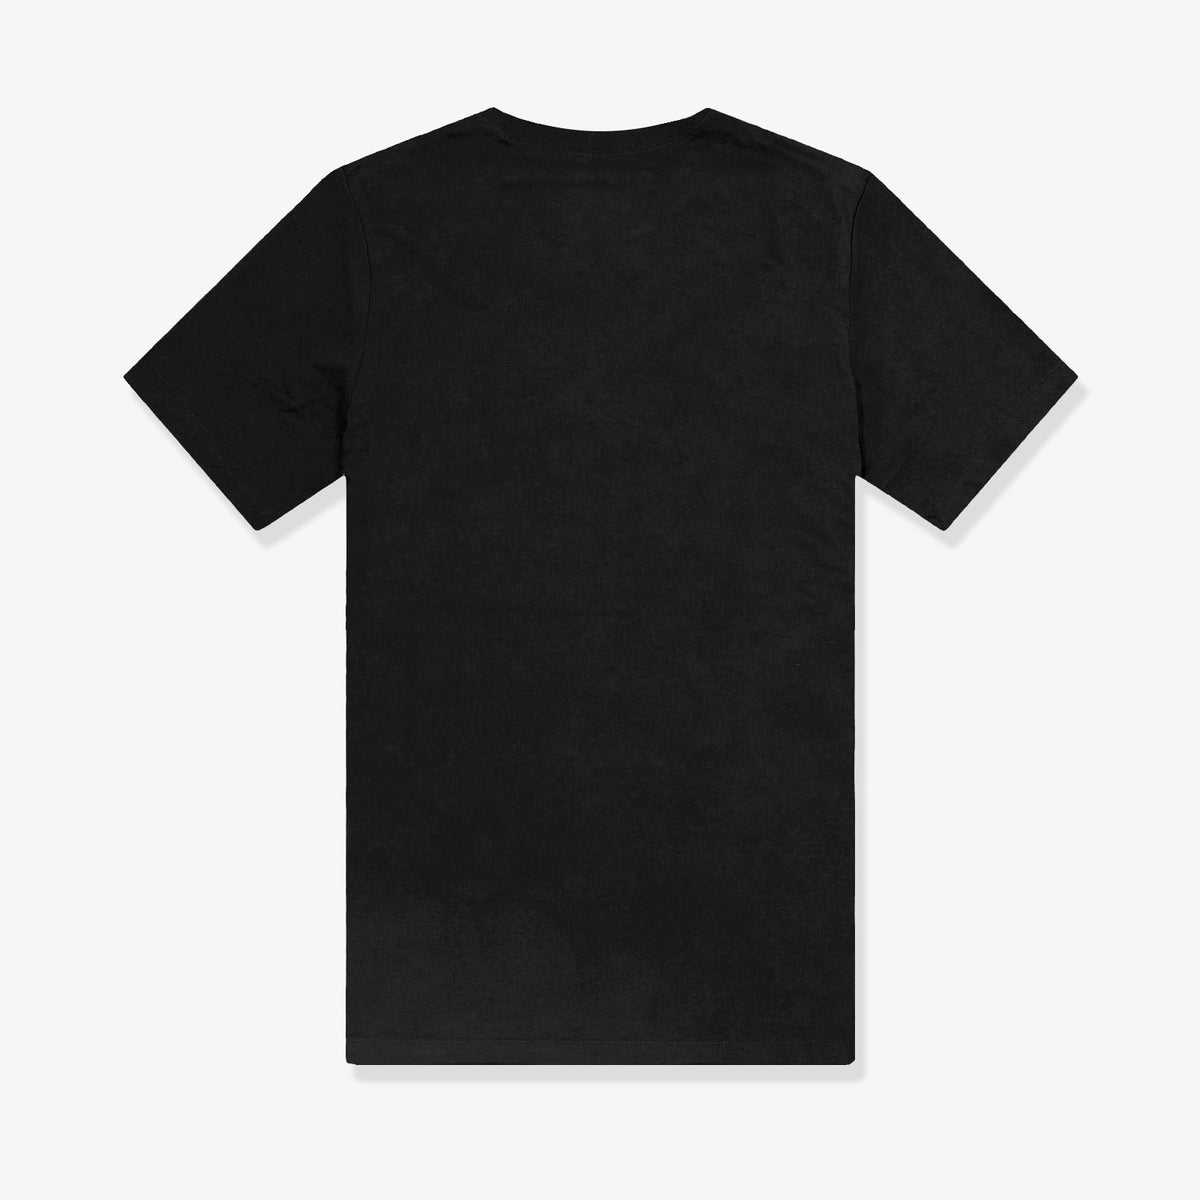 Jordan Logos Graphic T-Shirt - Black